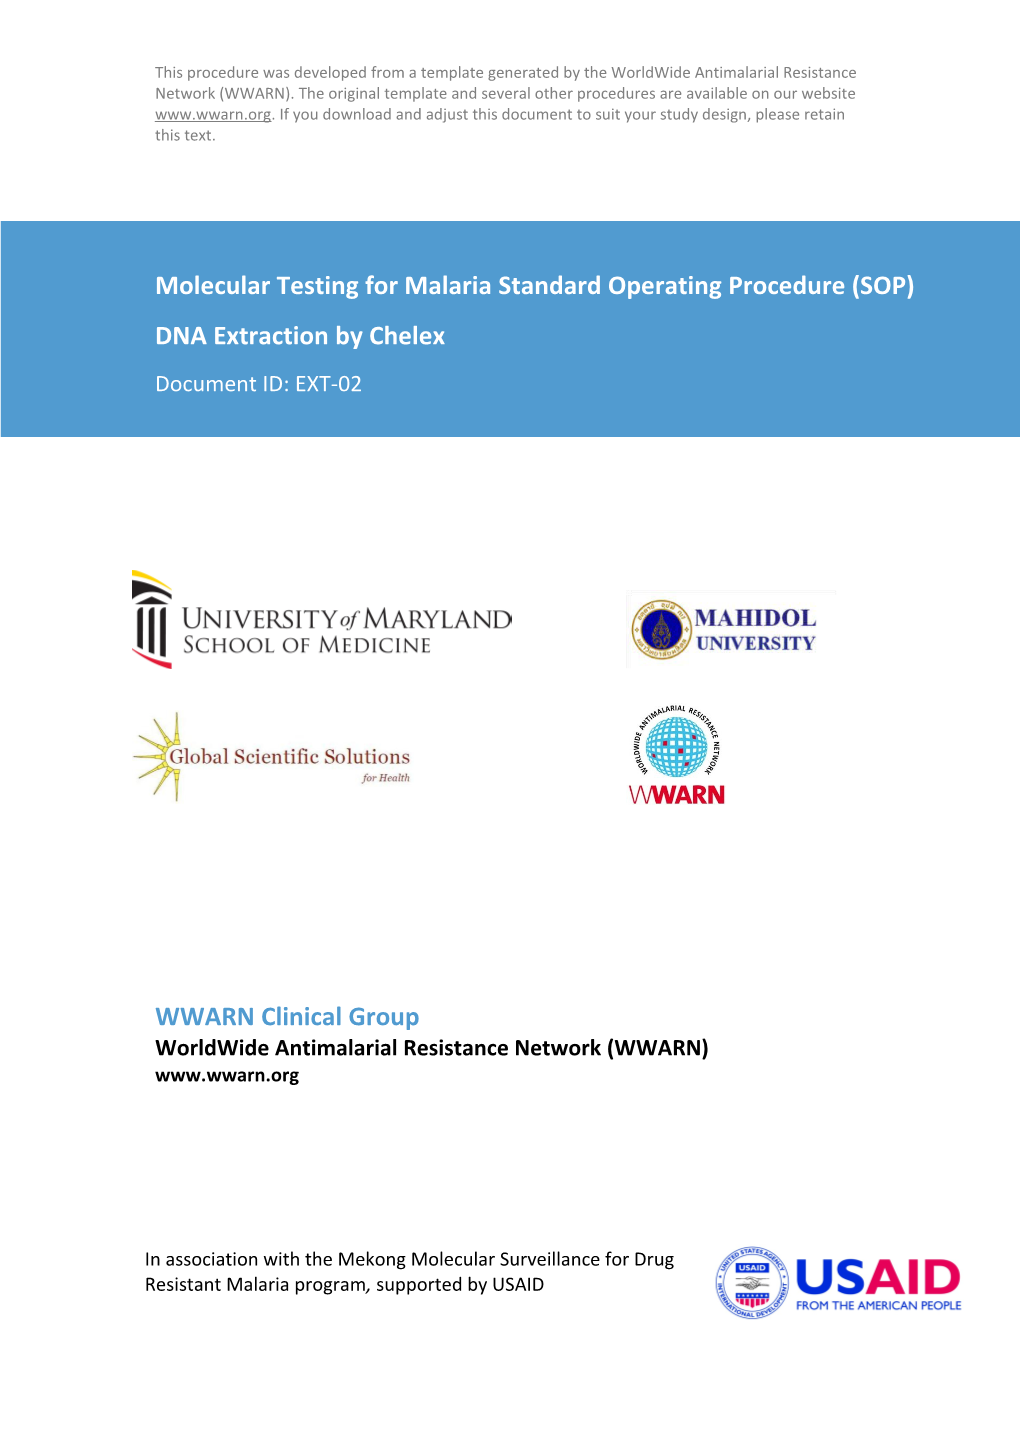 Molecular Testing for Malaria Standard Operating Procedure (SOP)